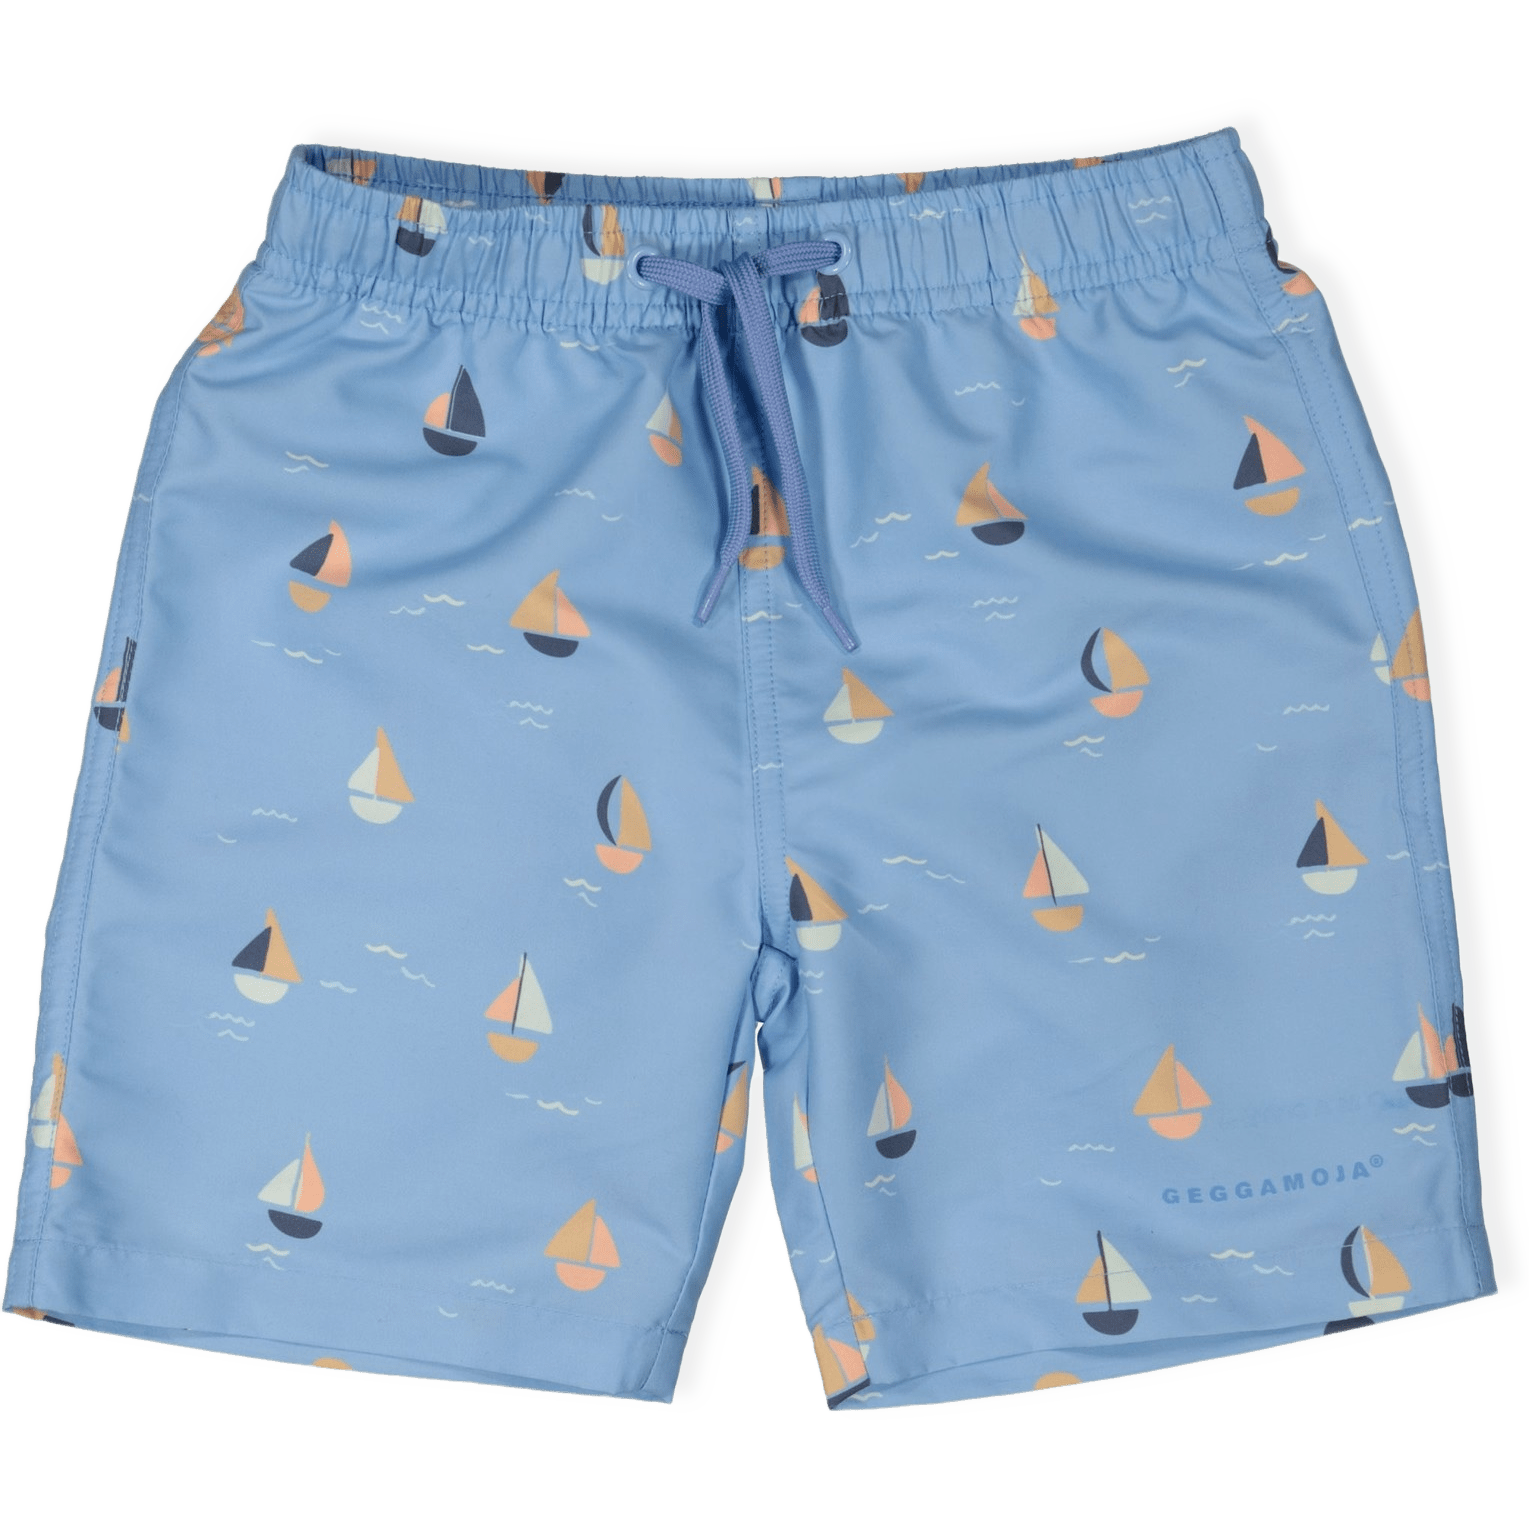 Uv-shorts från Geggamoja